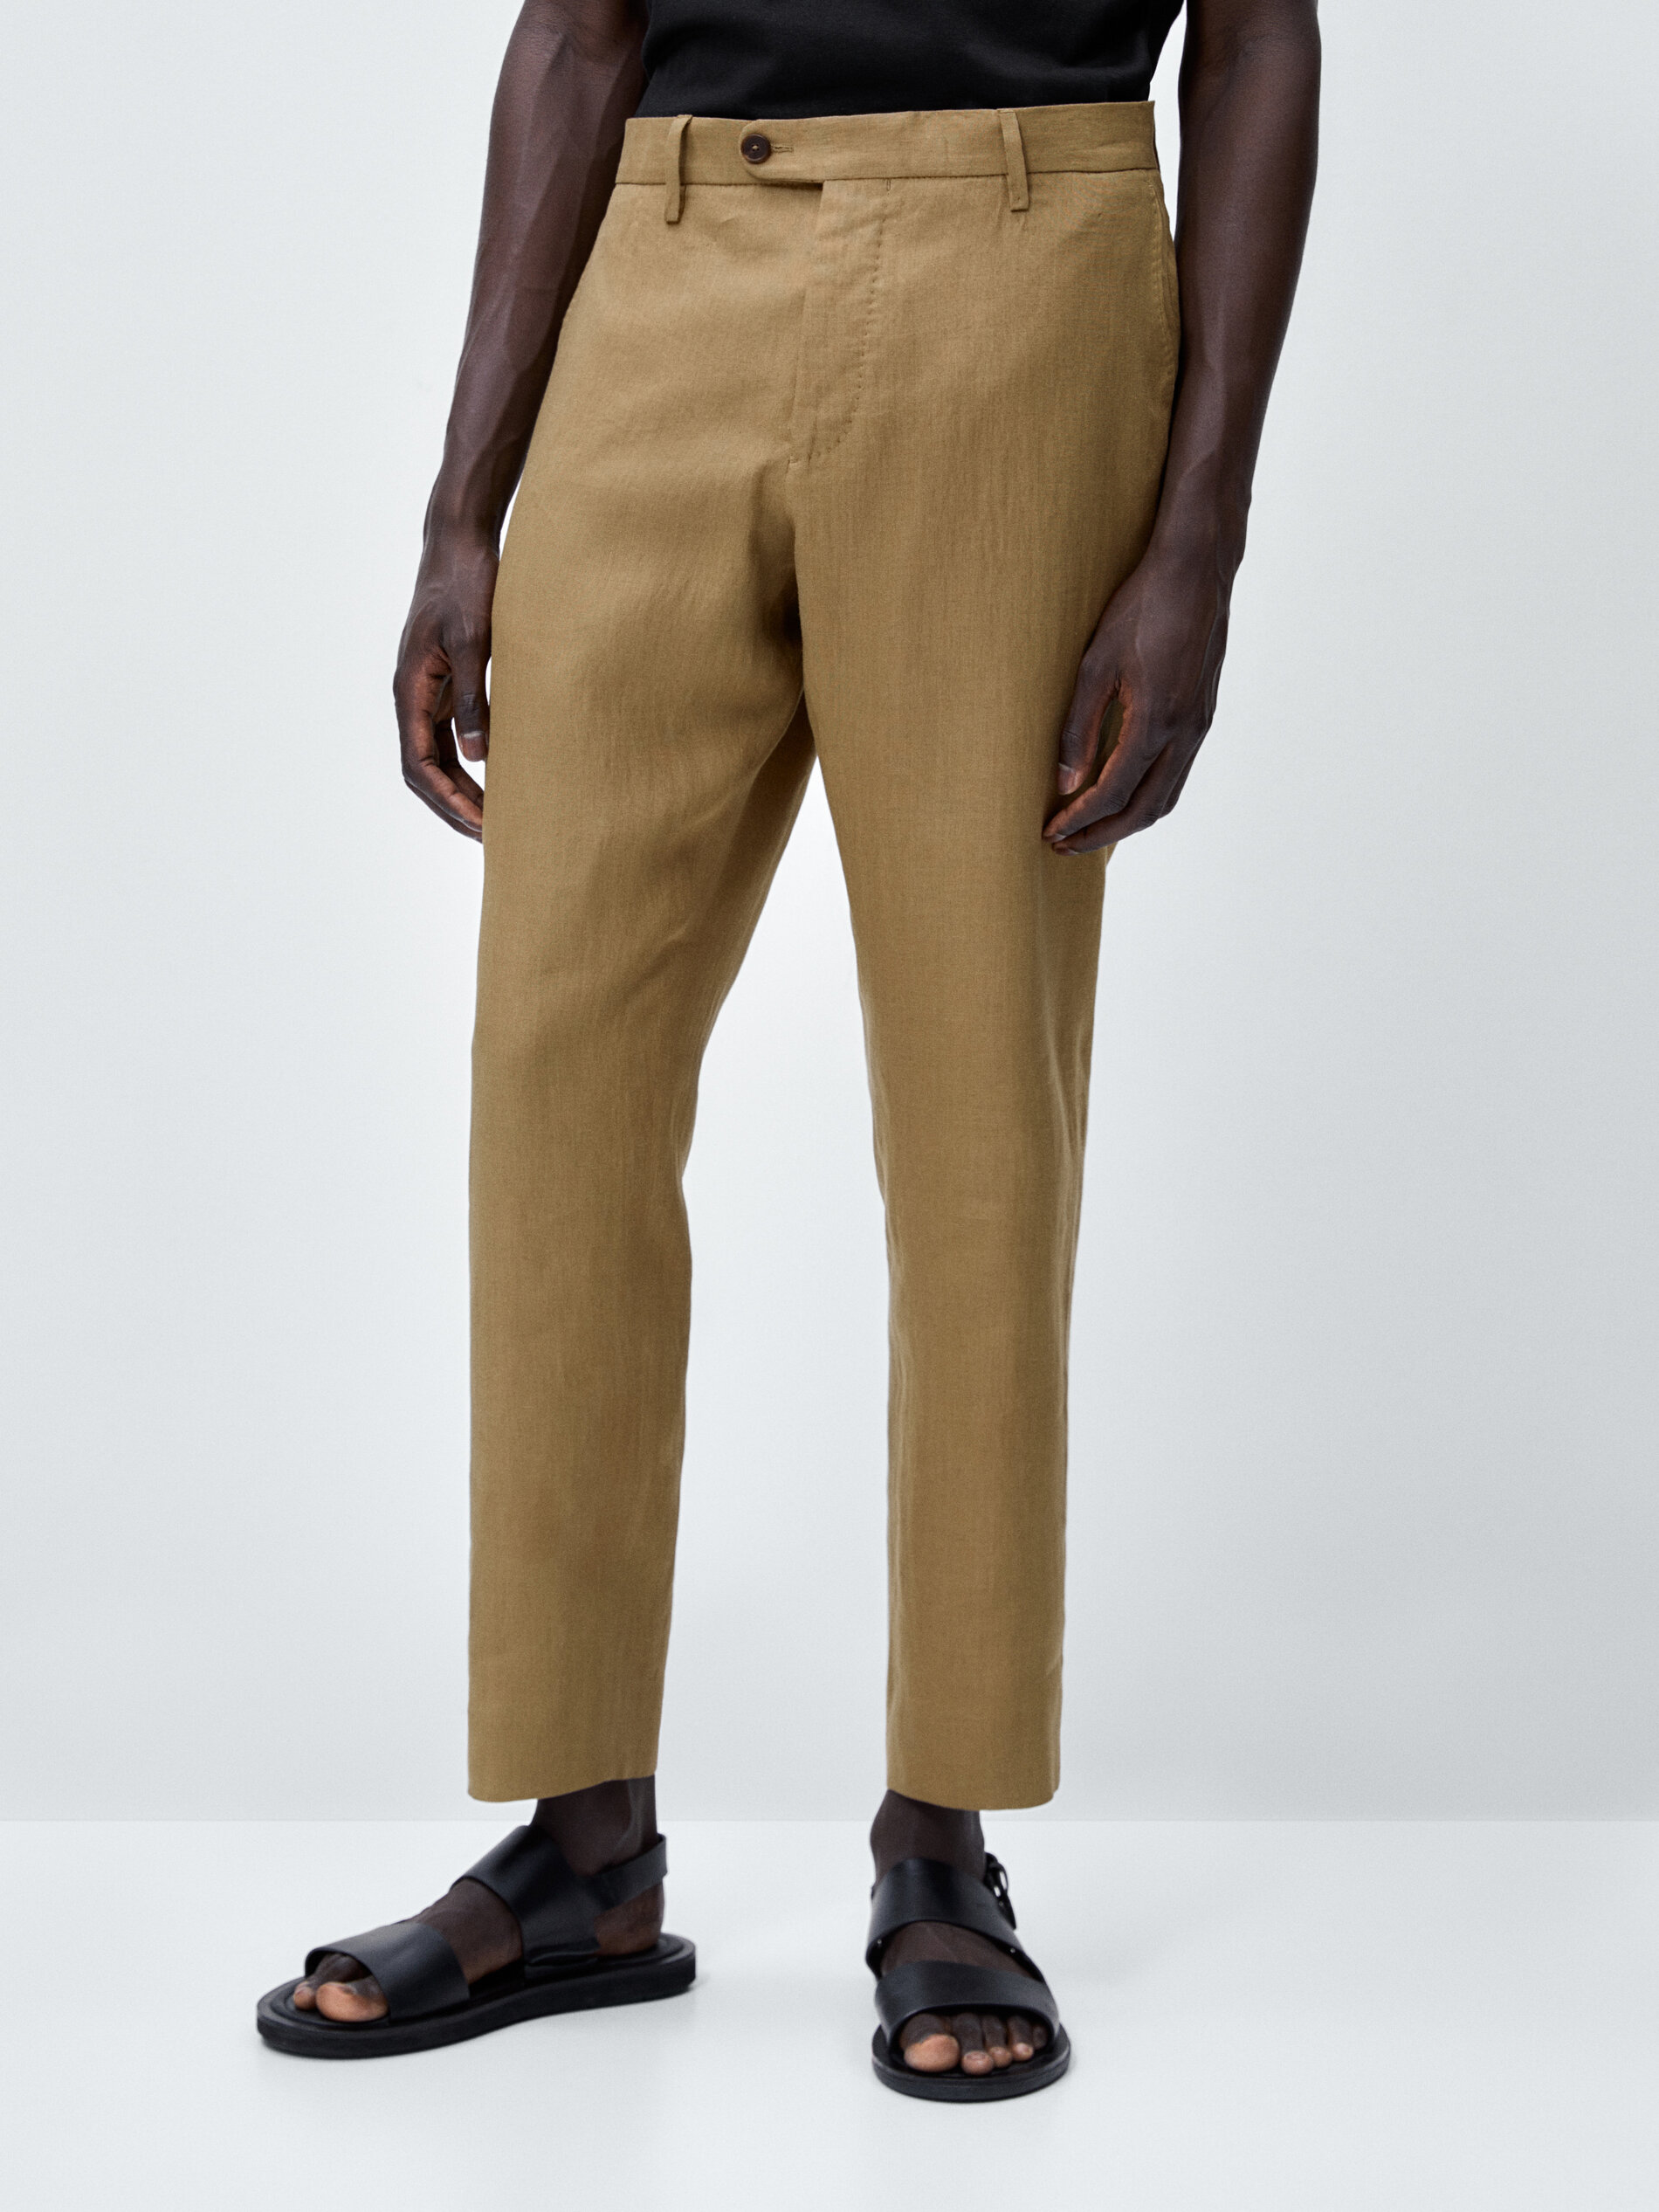 Elegant Massimo Dutti Linen Pants with Tie Belt